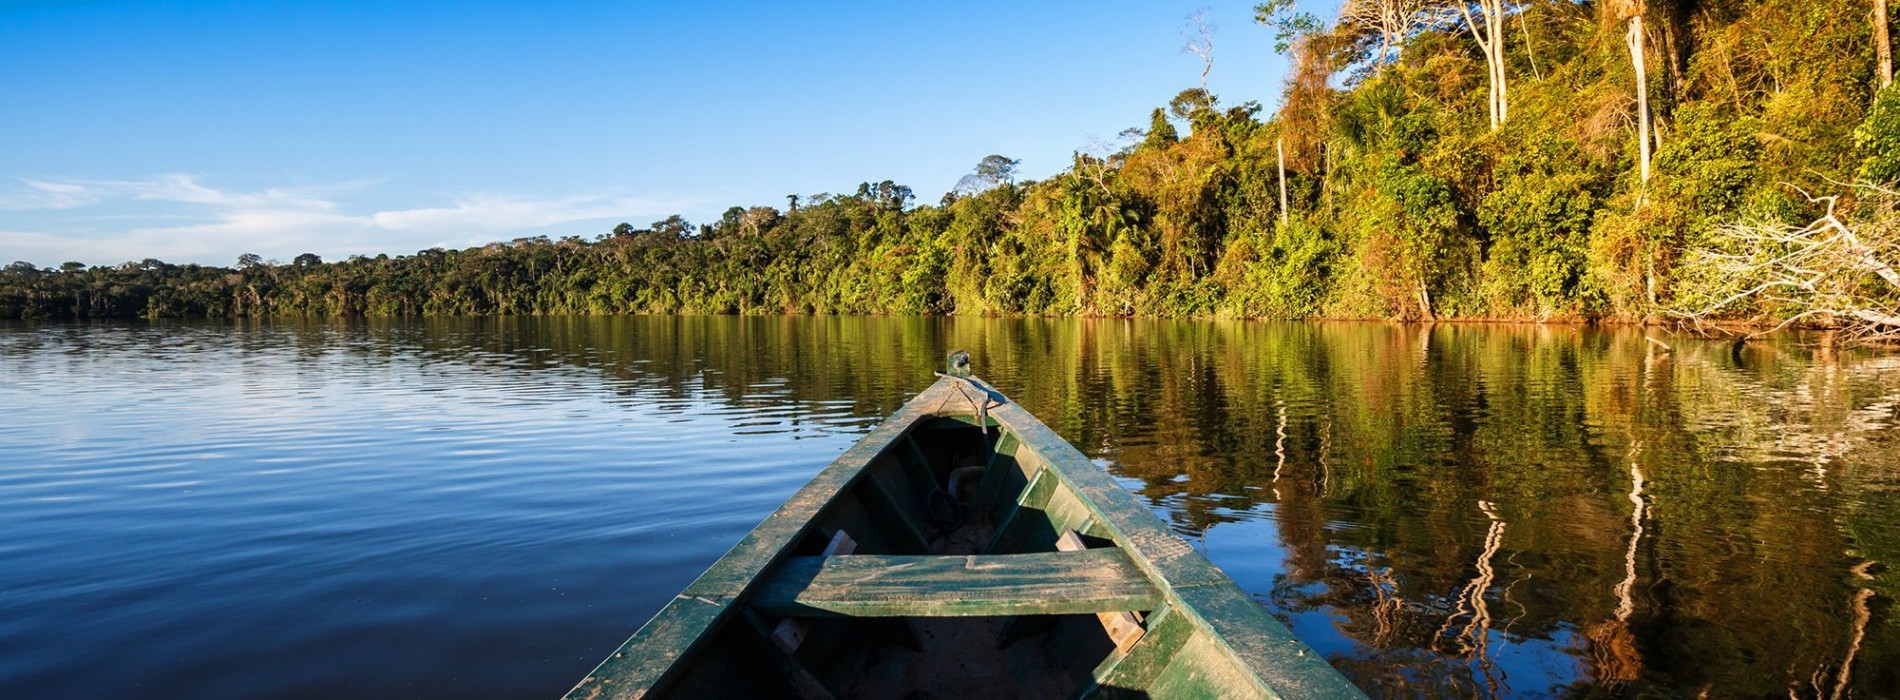 Amazon Rainforest by boat